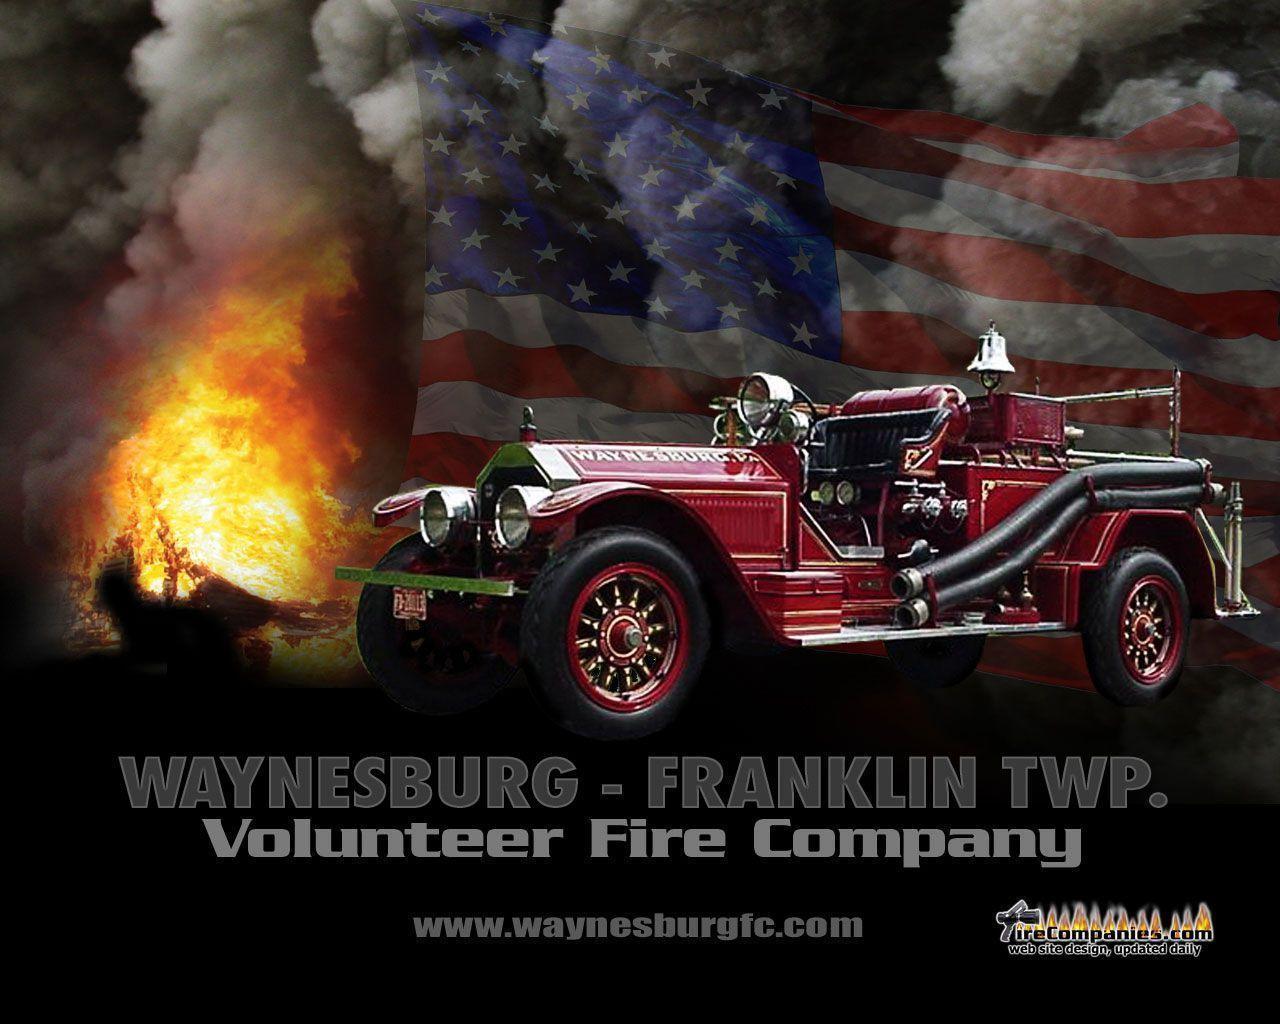 Welcome to WAYNESBURG TWP. Volunteer Fire Company